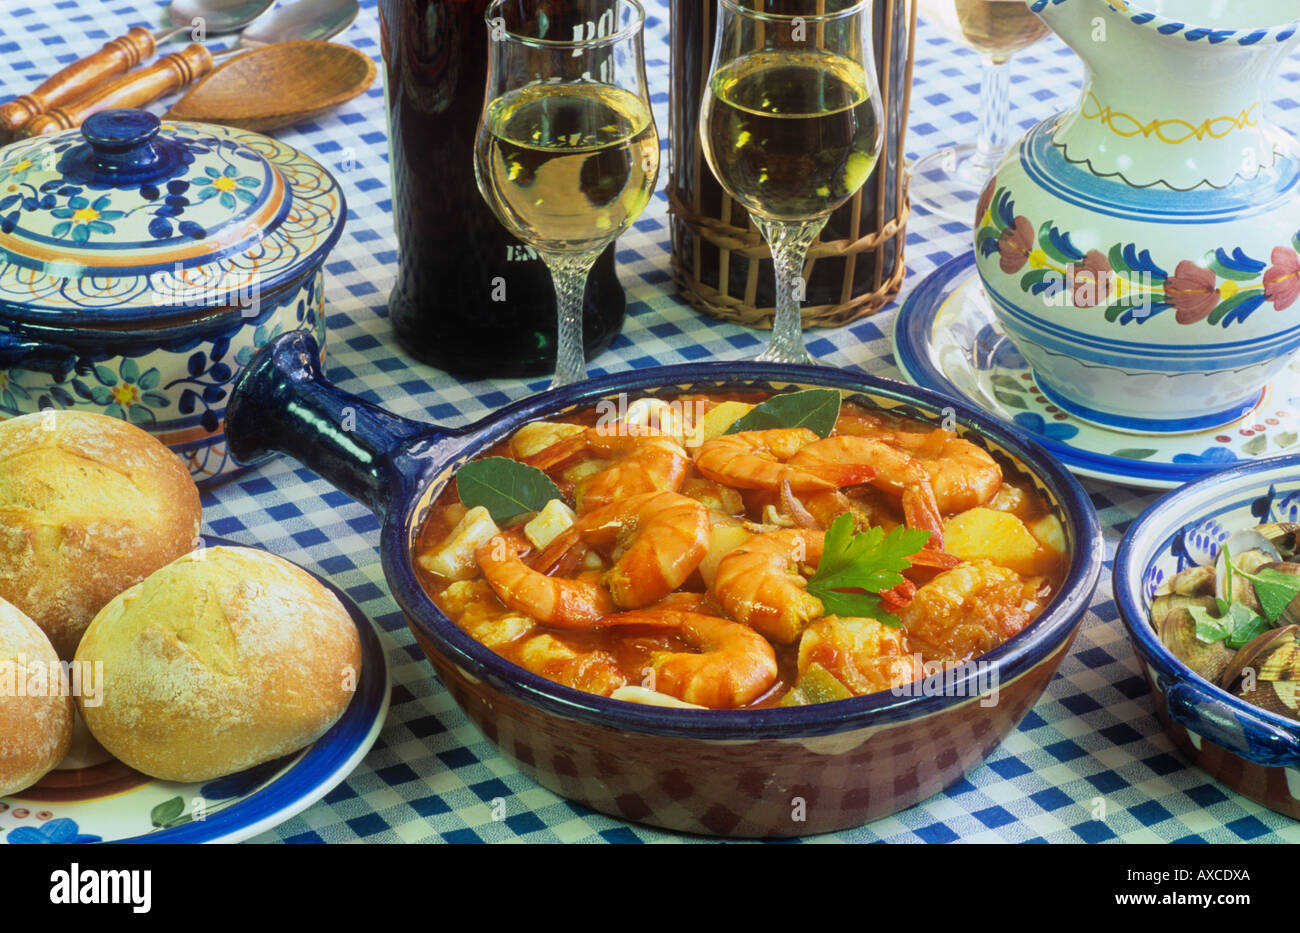 Portugal food caldeirada fish stew -Fotos und -Bildmaterial in hoher ...